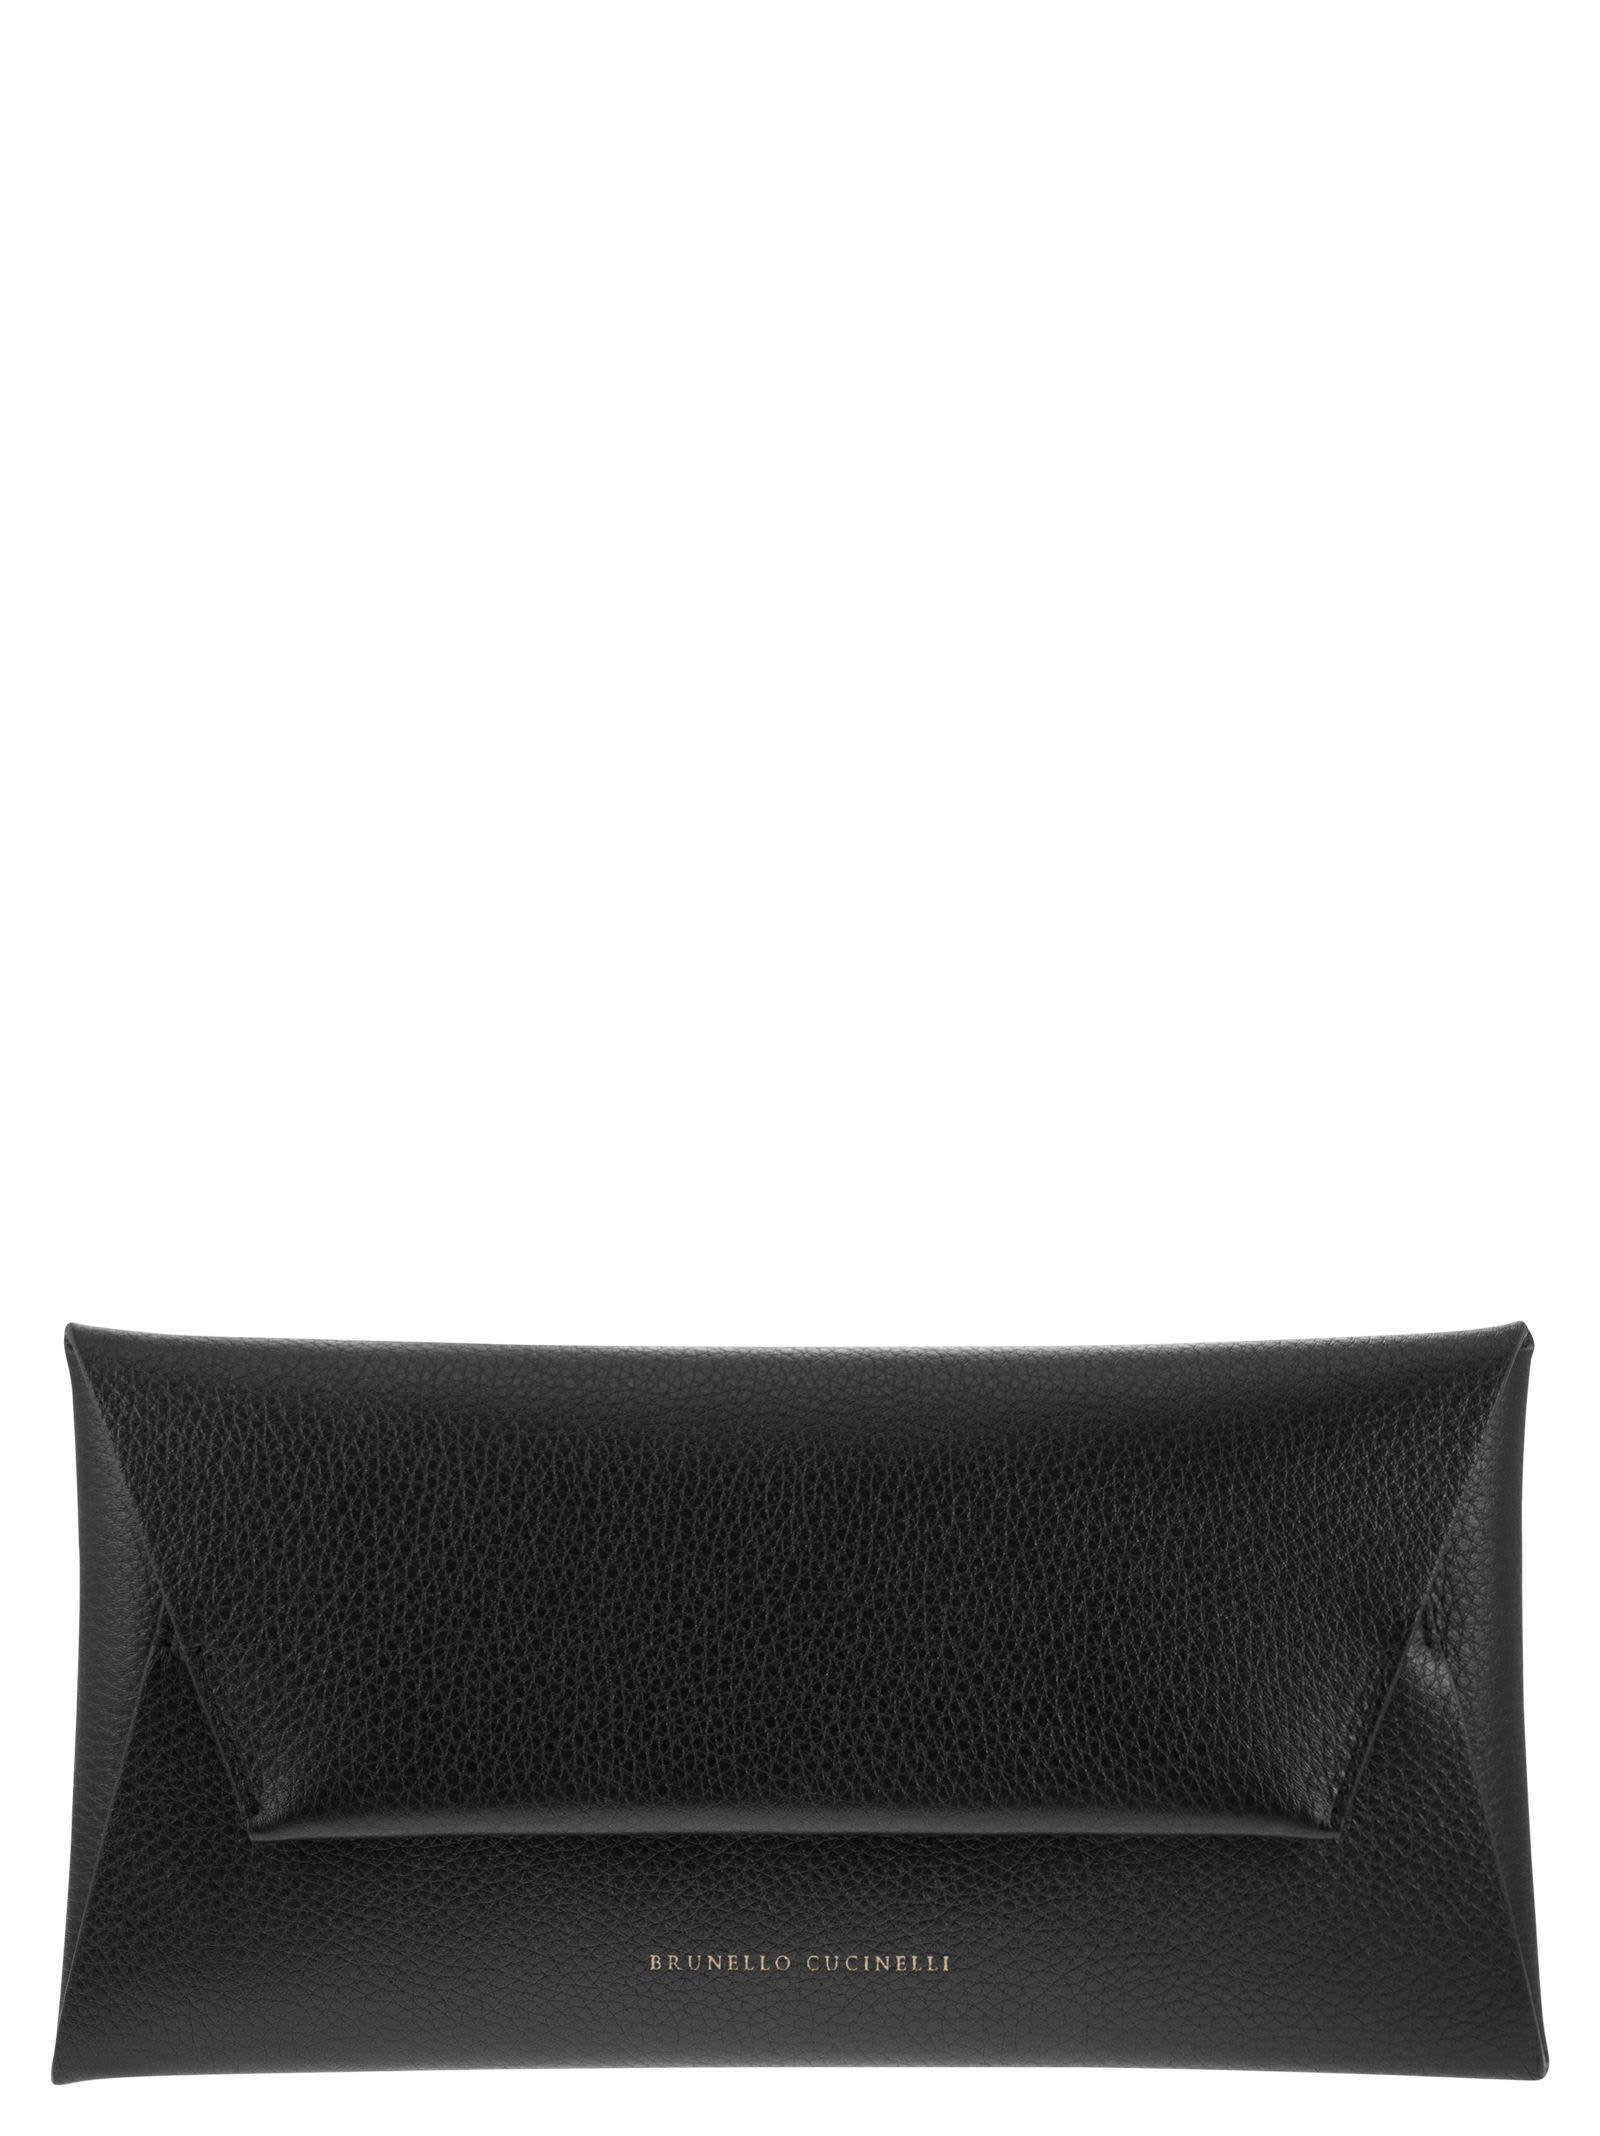 Brunello Cucinelli Leather Cross-body Bag